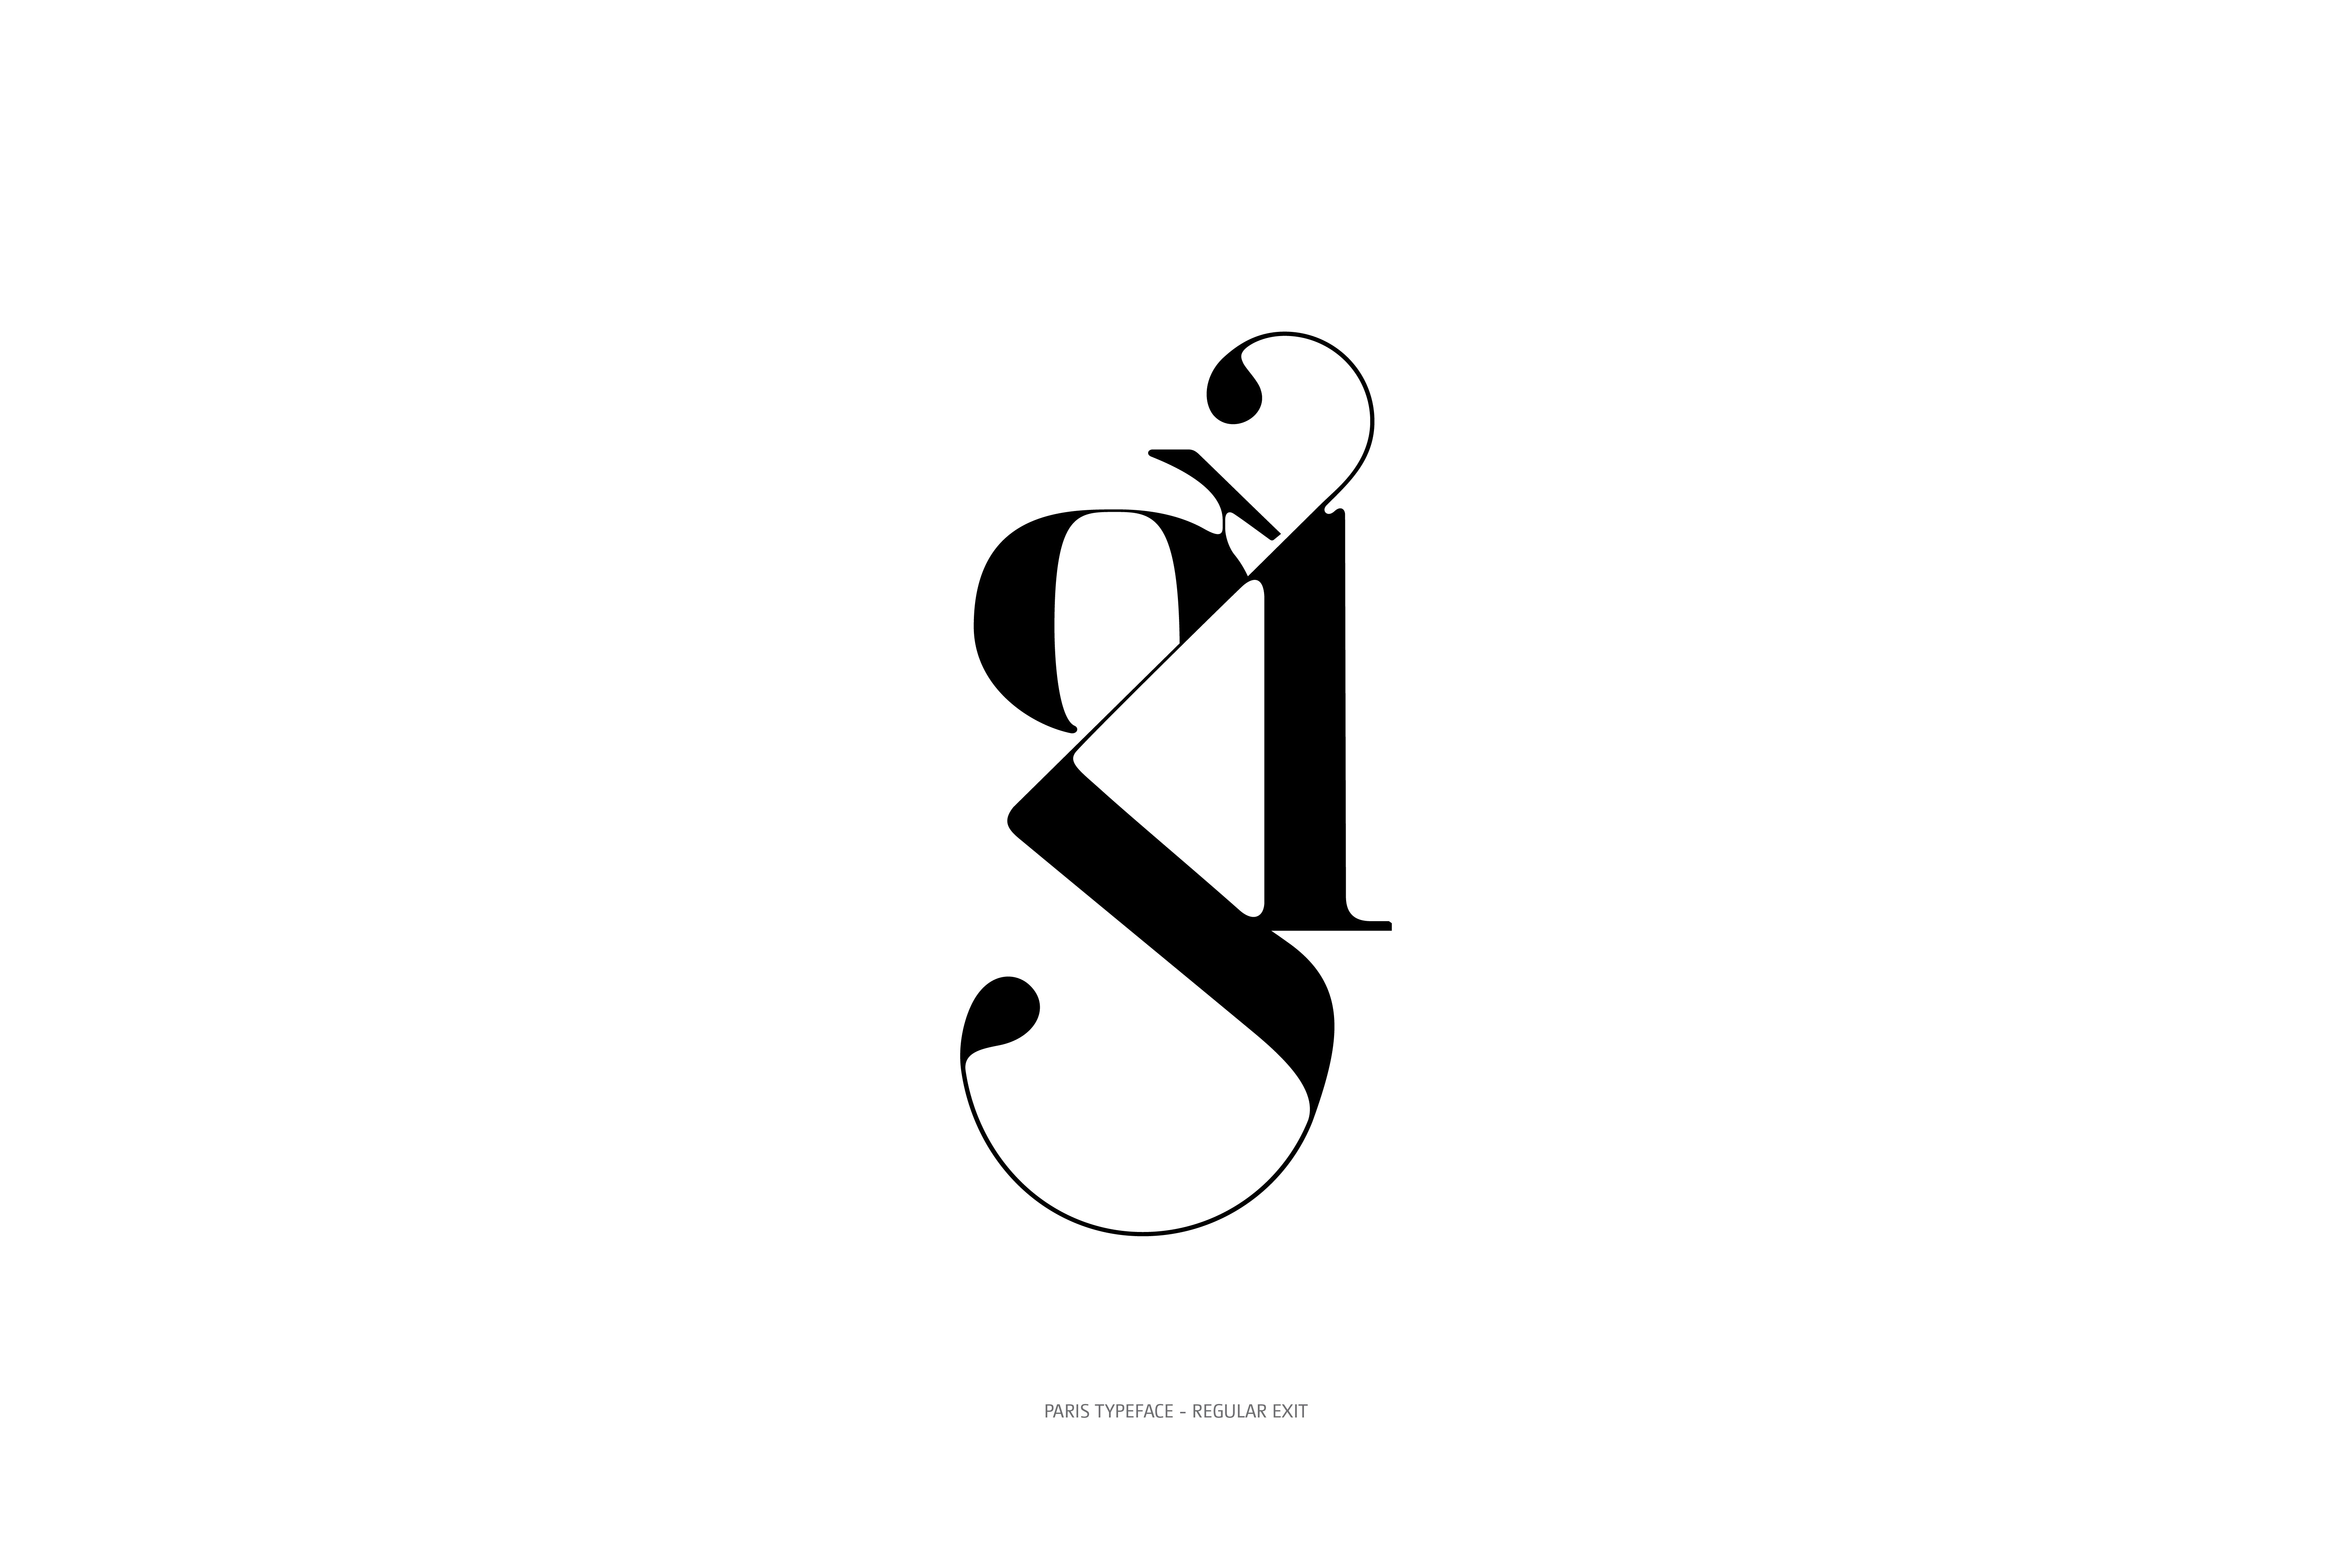 Paris Typeface Regular Exit gi ligature